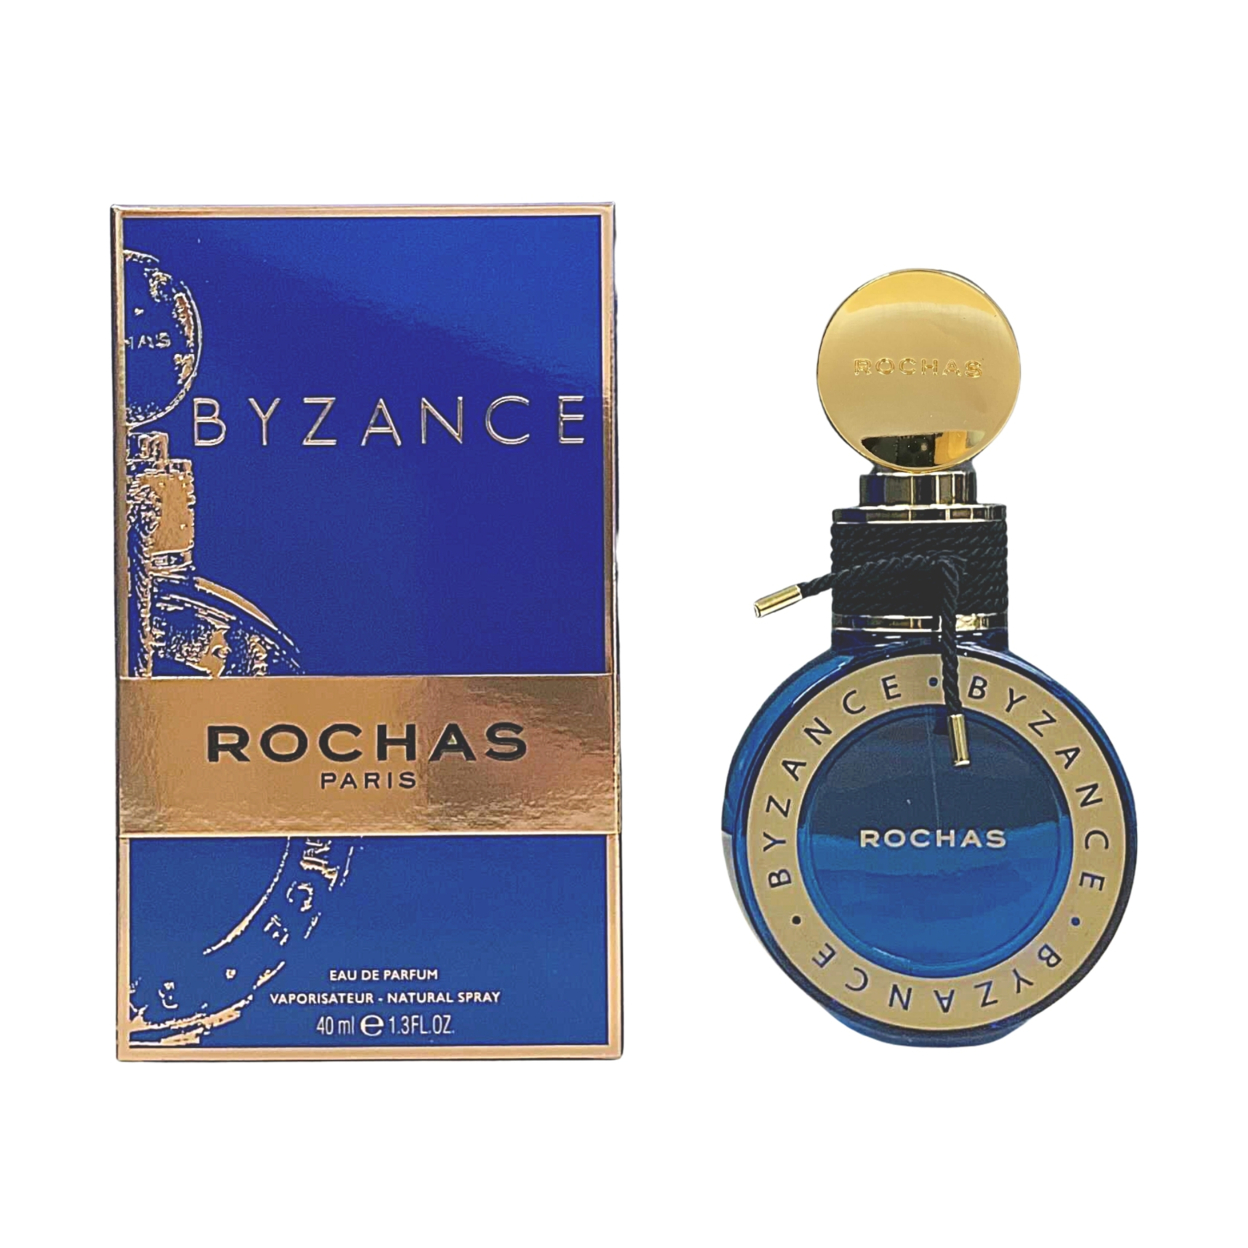 Rochas Byzance Eau De Parfum For Women 1.3 Oz / 40 Ml - Spray - 2019 Edition